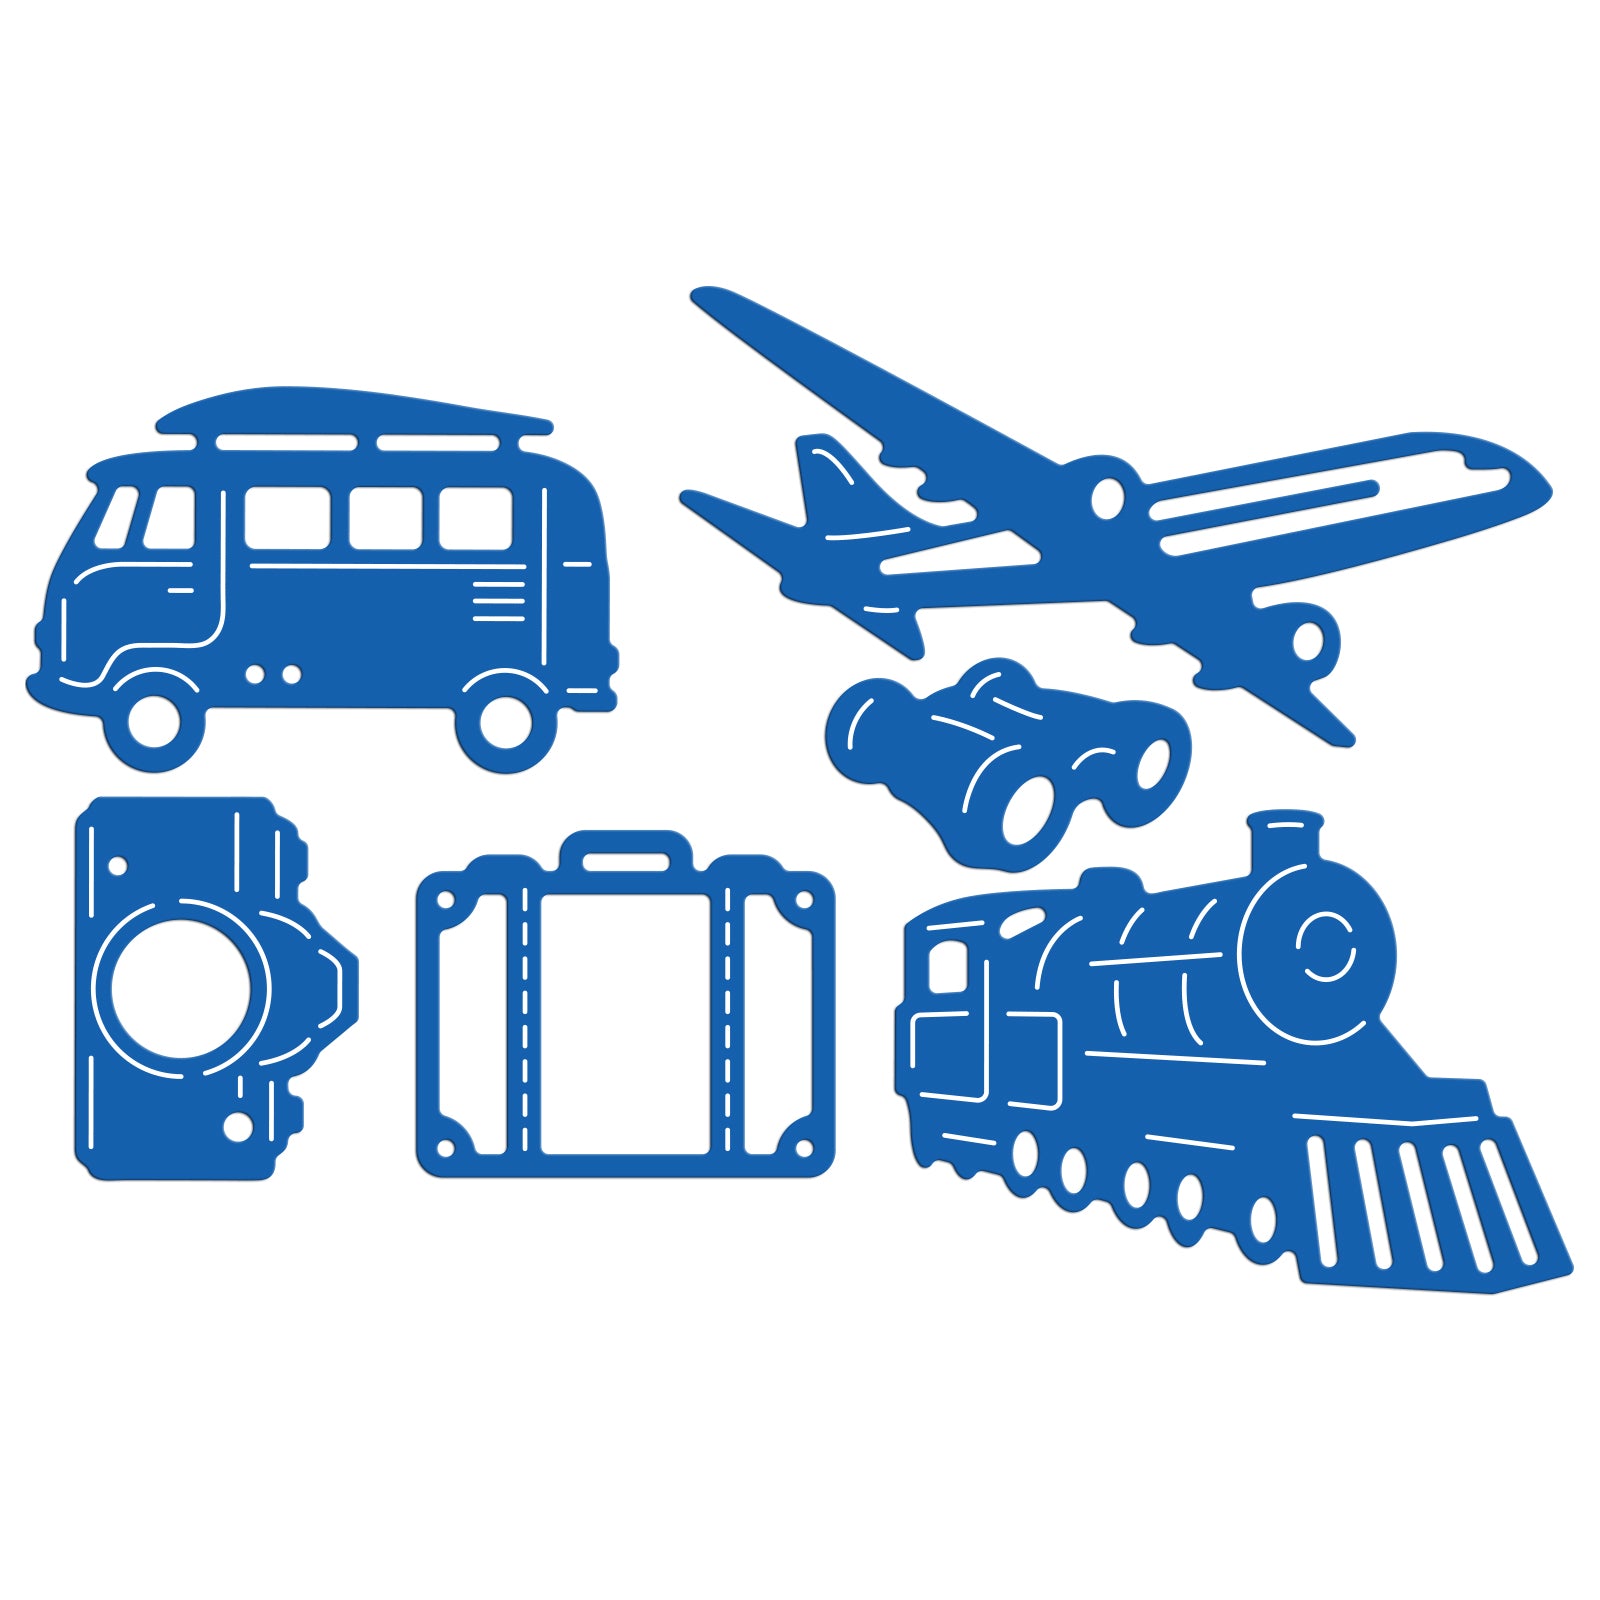 Globleland Train, Plane, Suitcase, Camera, Travel Bus, Binoculars Carbon Steel Cutting Dies Stencils, for DIY Scrapbooking/Photo Album, Decorative Embossing DIY Paper Card